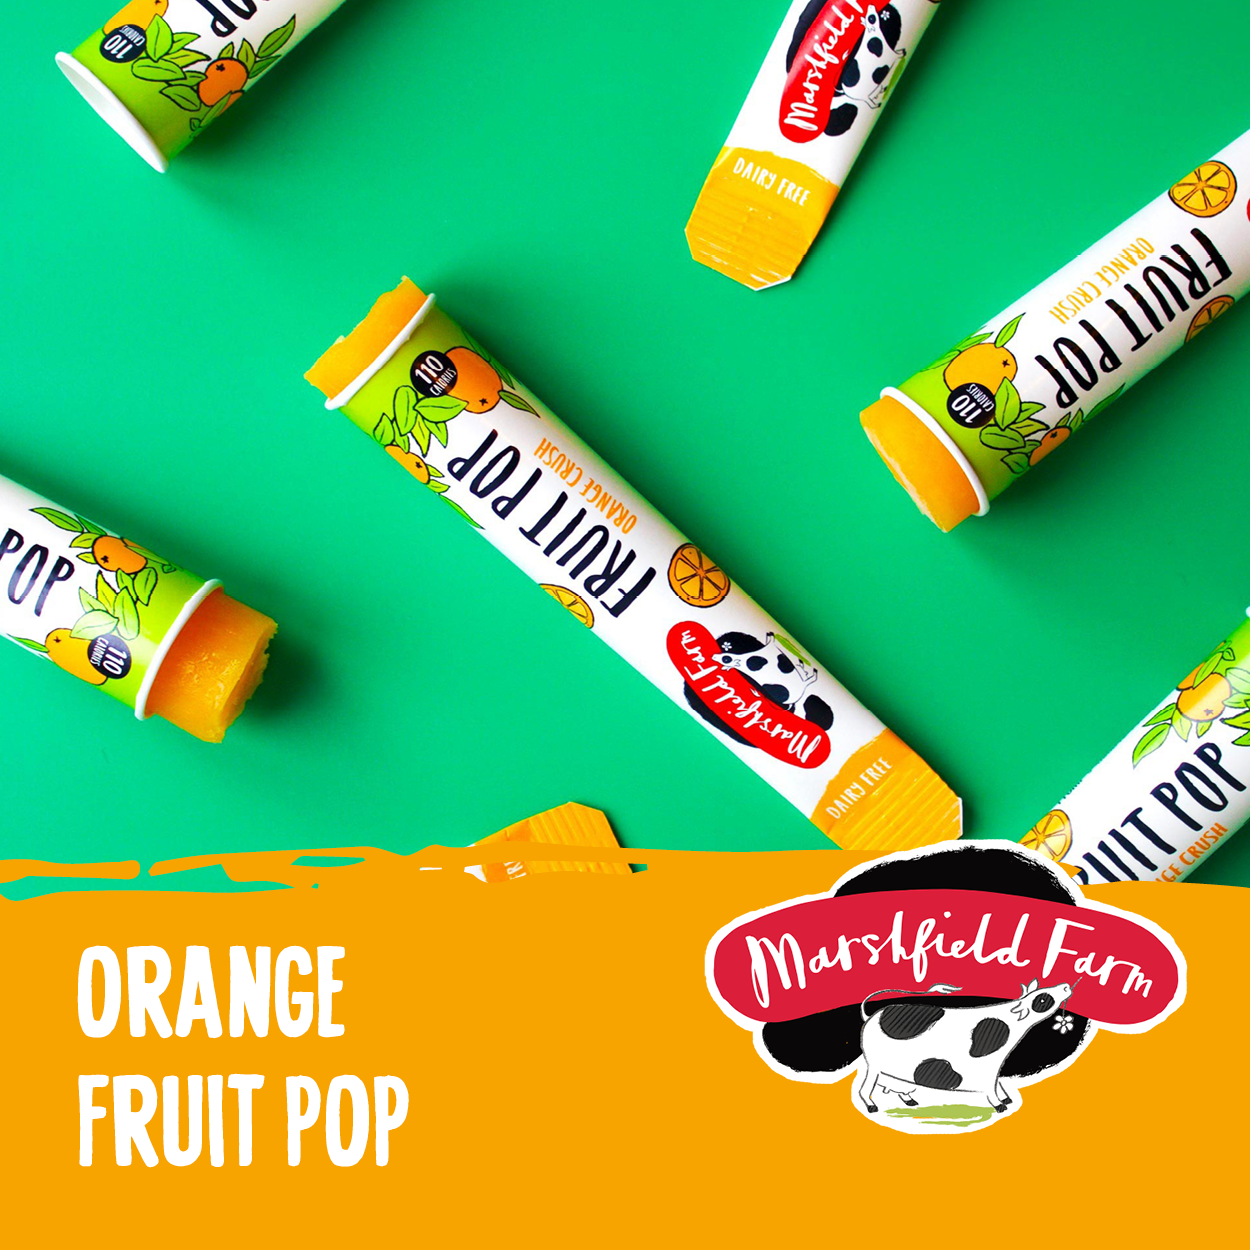 Marshfield Farm Orange Crush Push Up Fruit Pop